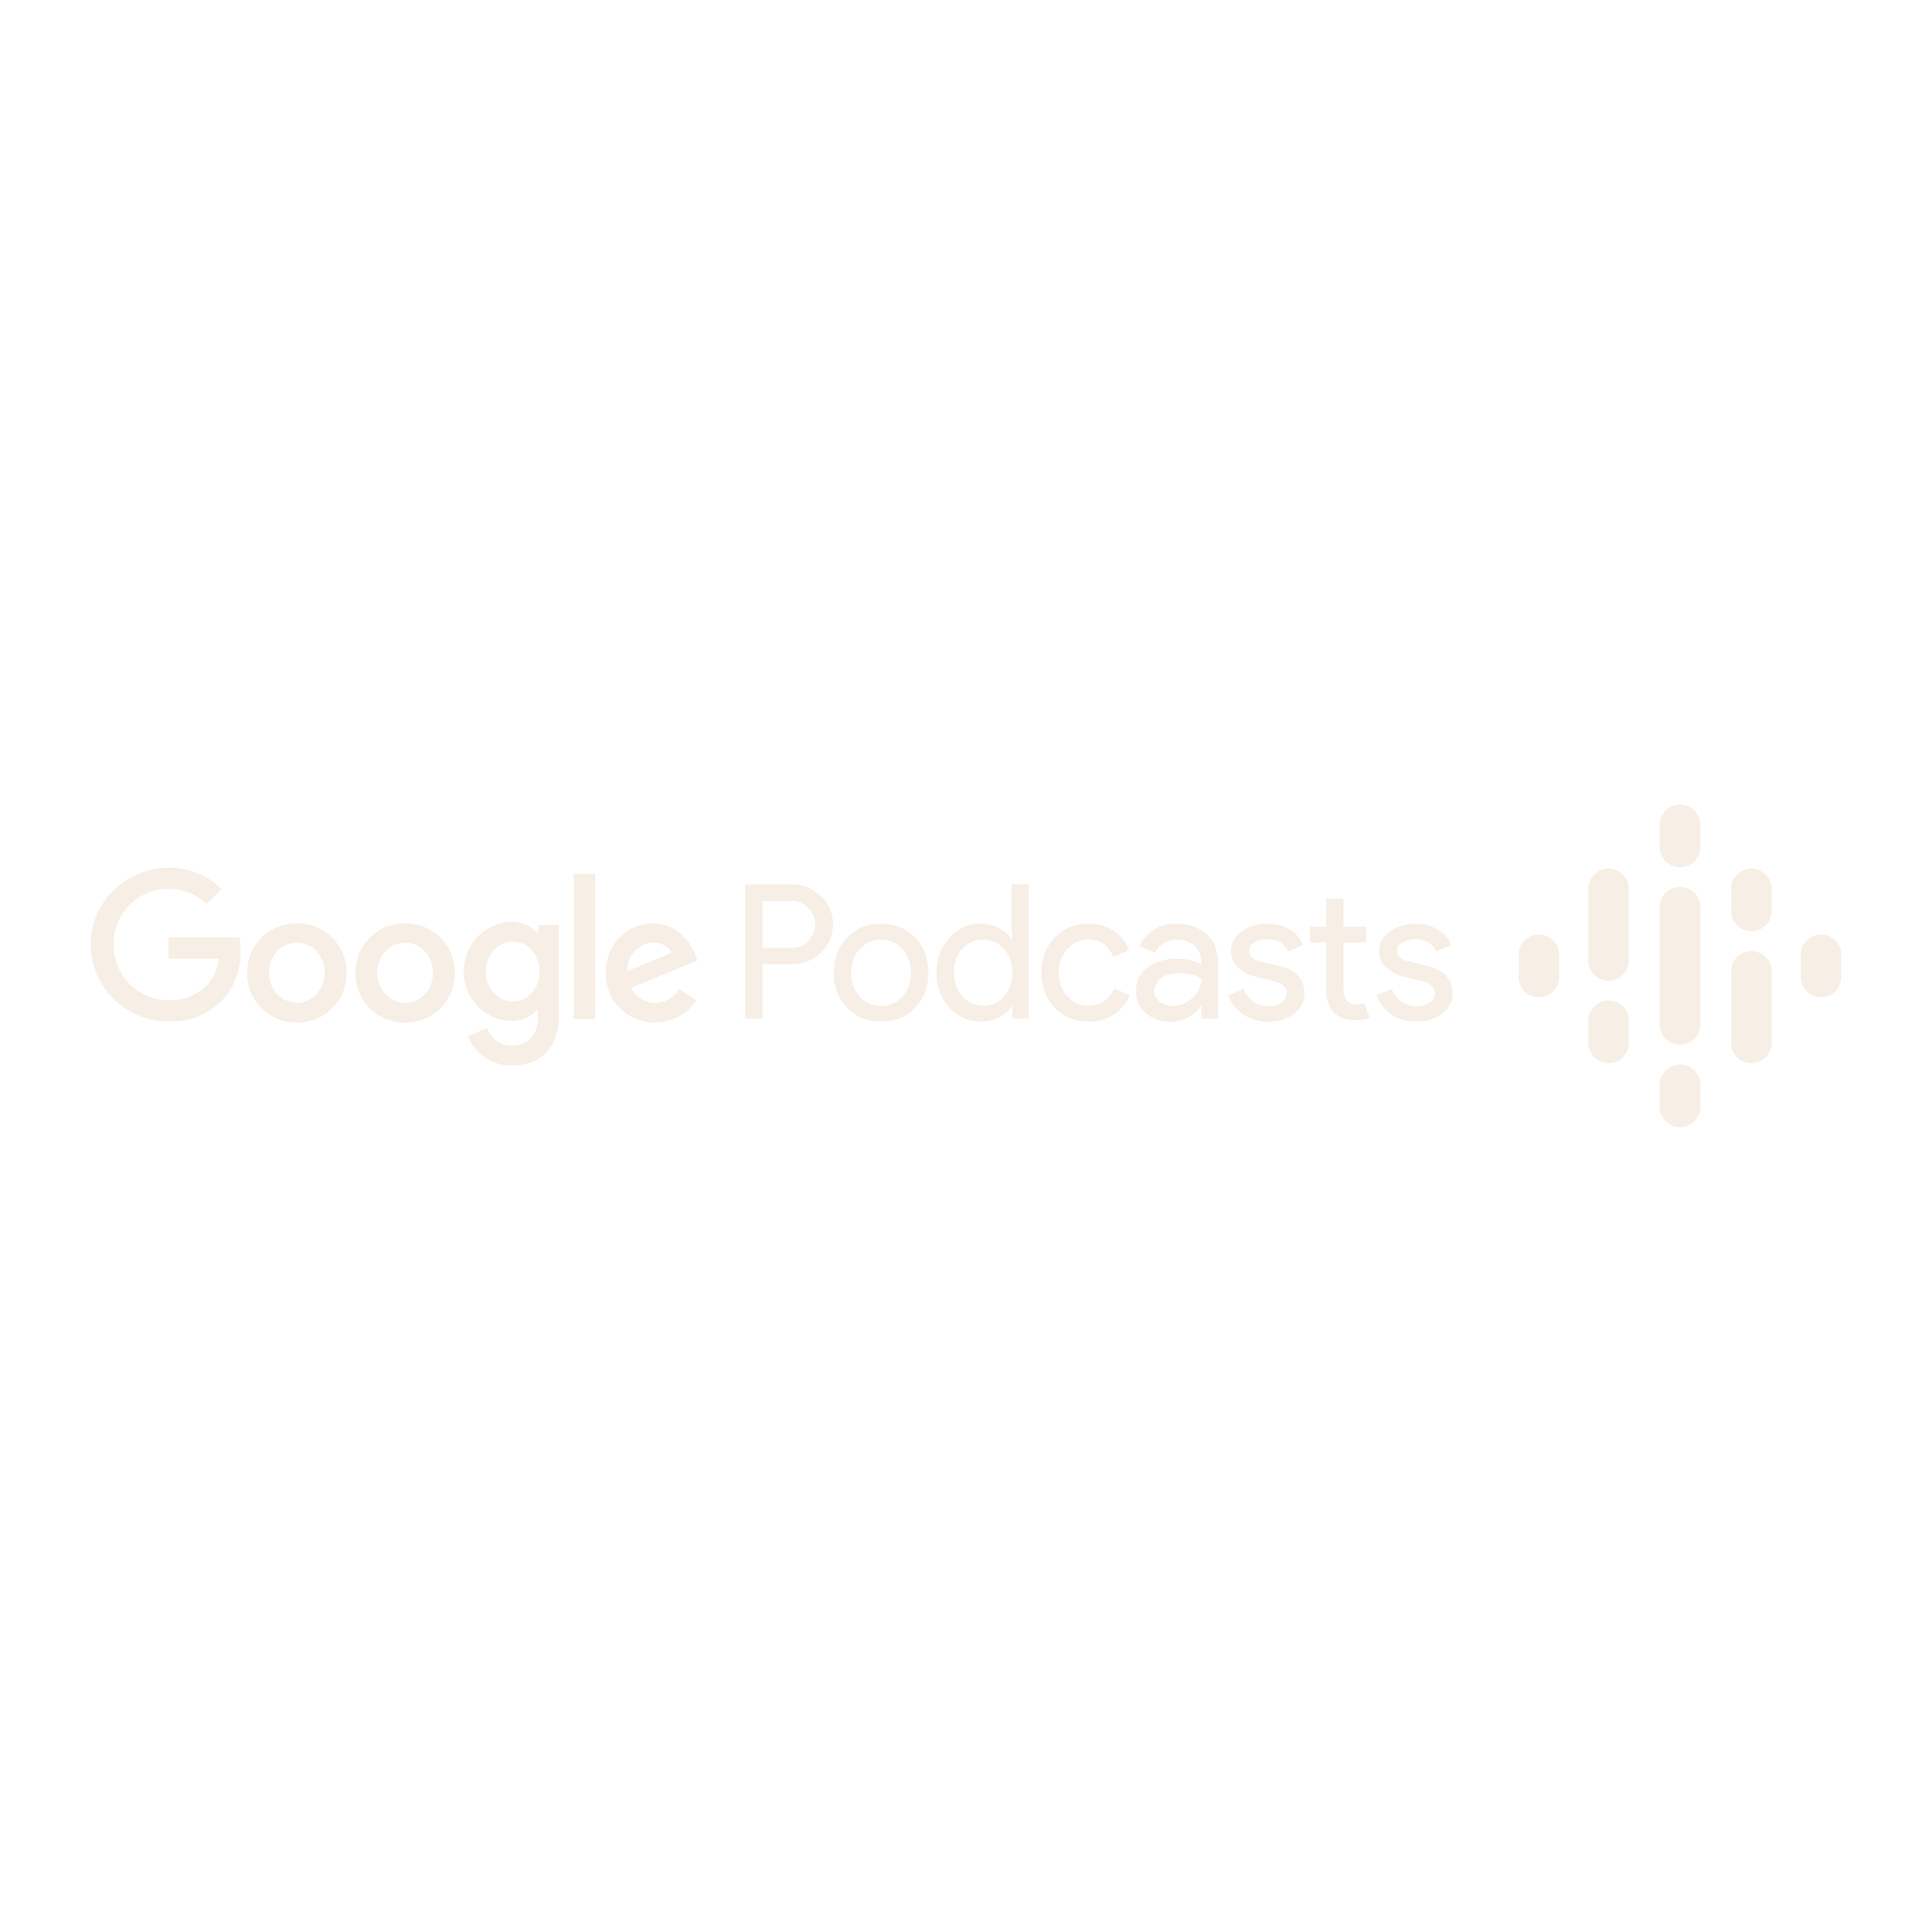 Podcast App Logos_Light-11.png